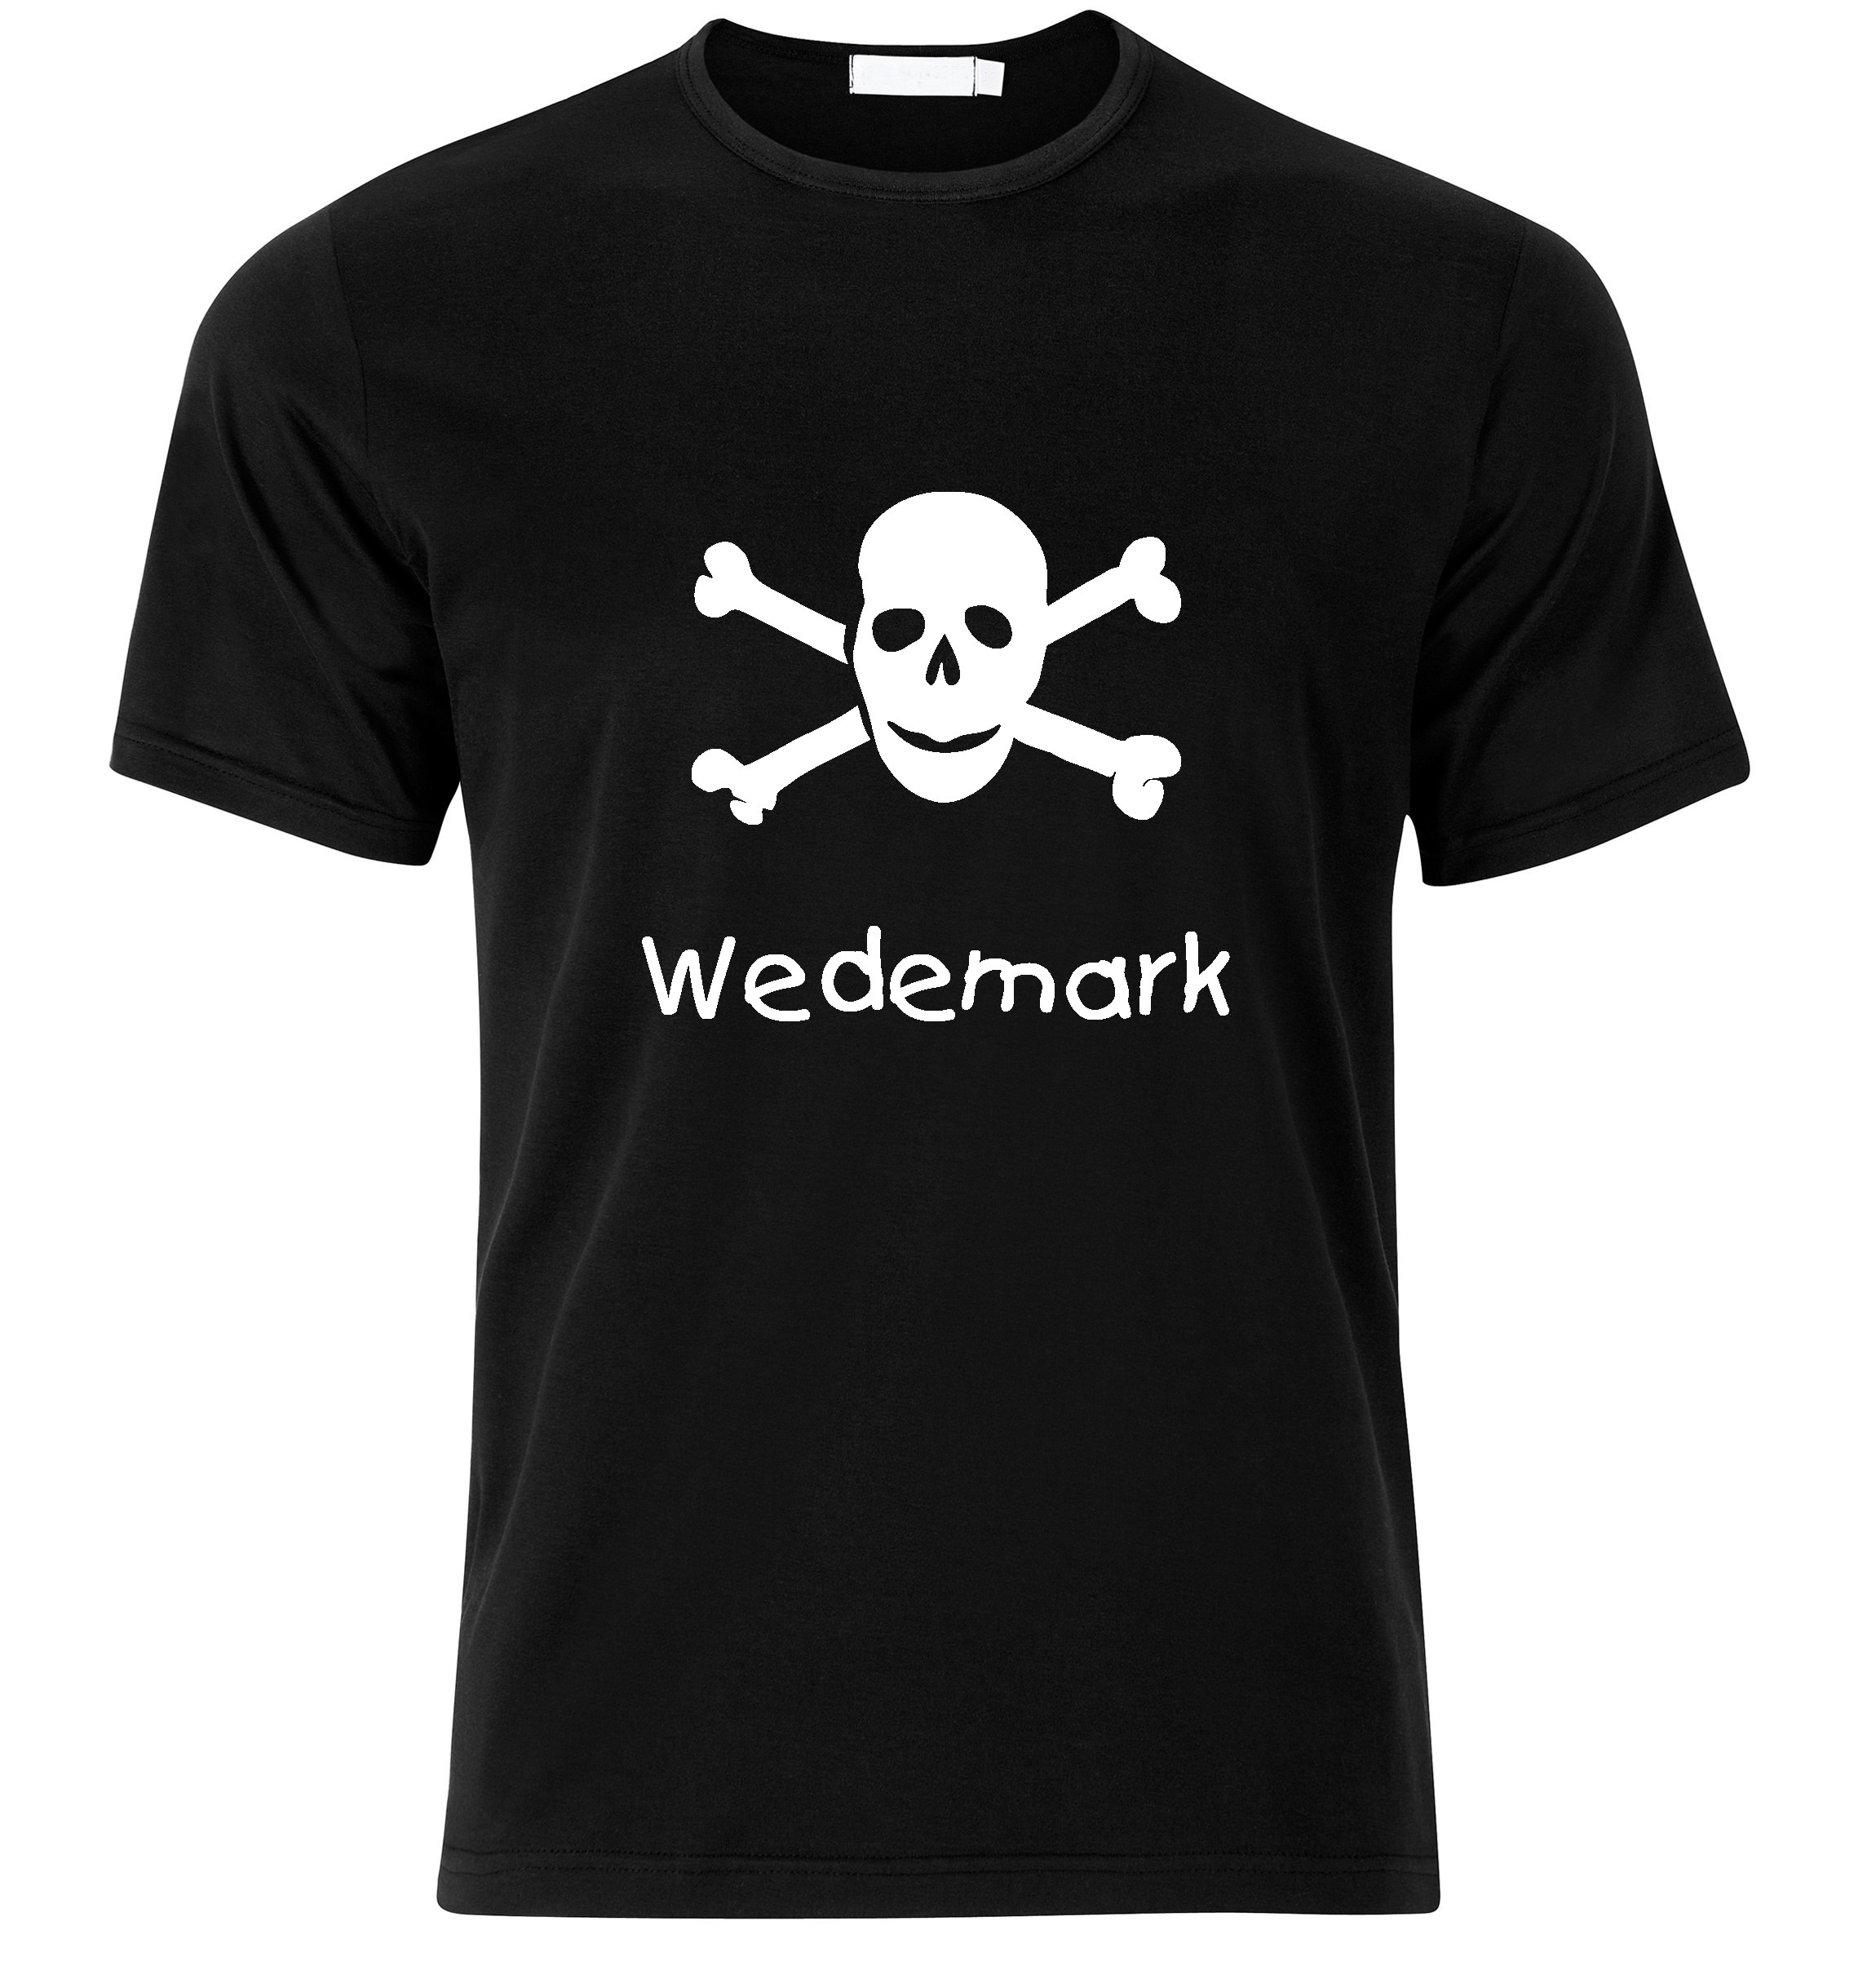 T-Shirt Wedemark Jolly Roger, Totenkopf